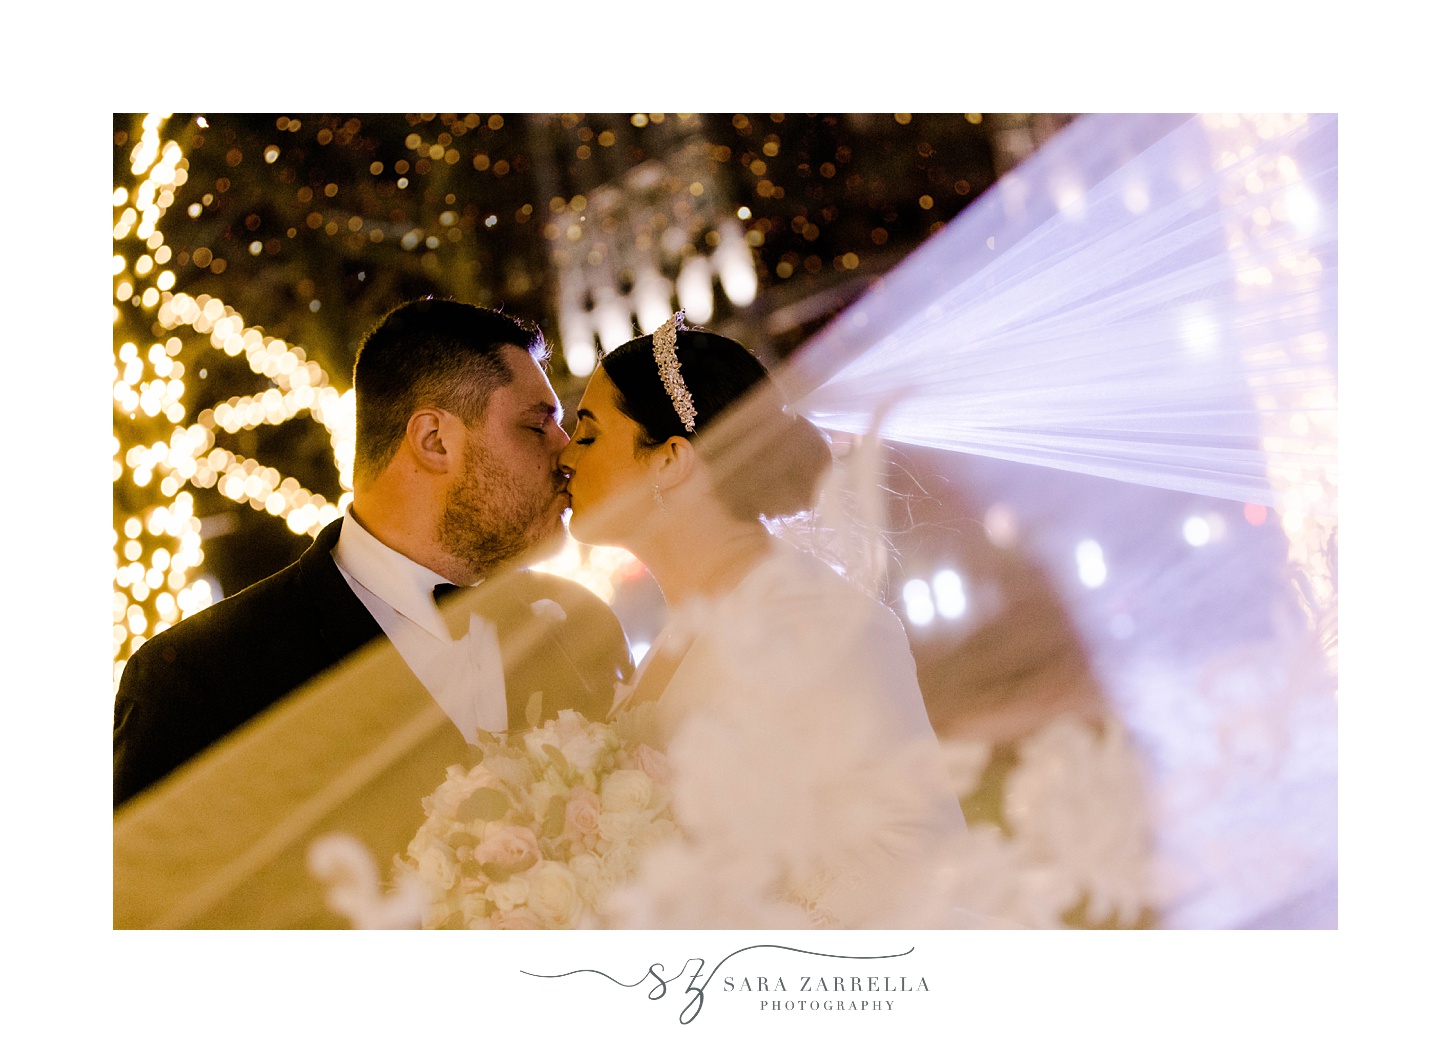 newlyweds kiss with bride's veil floating around them